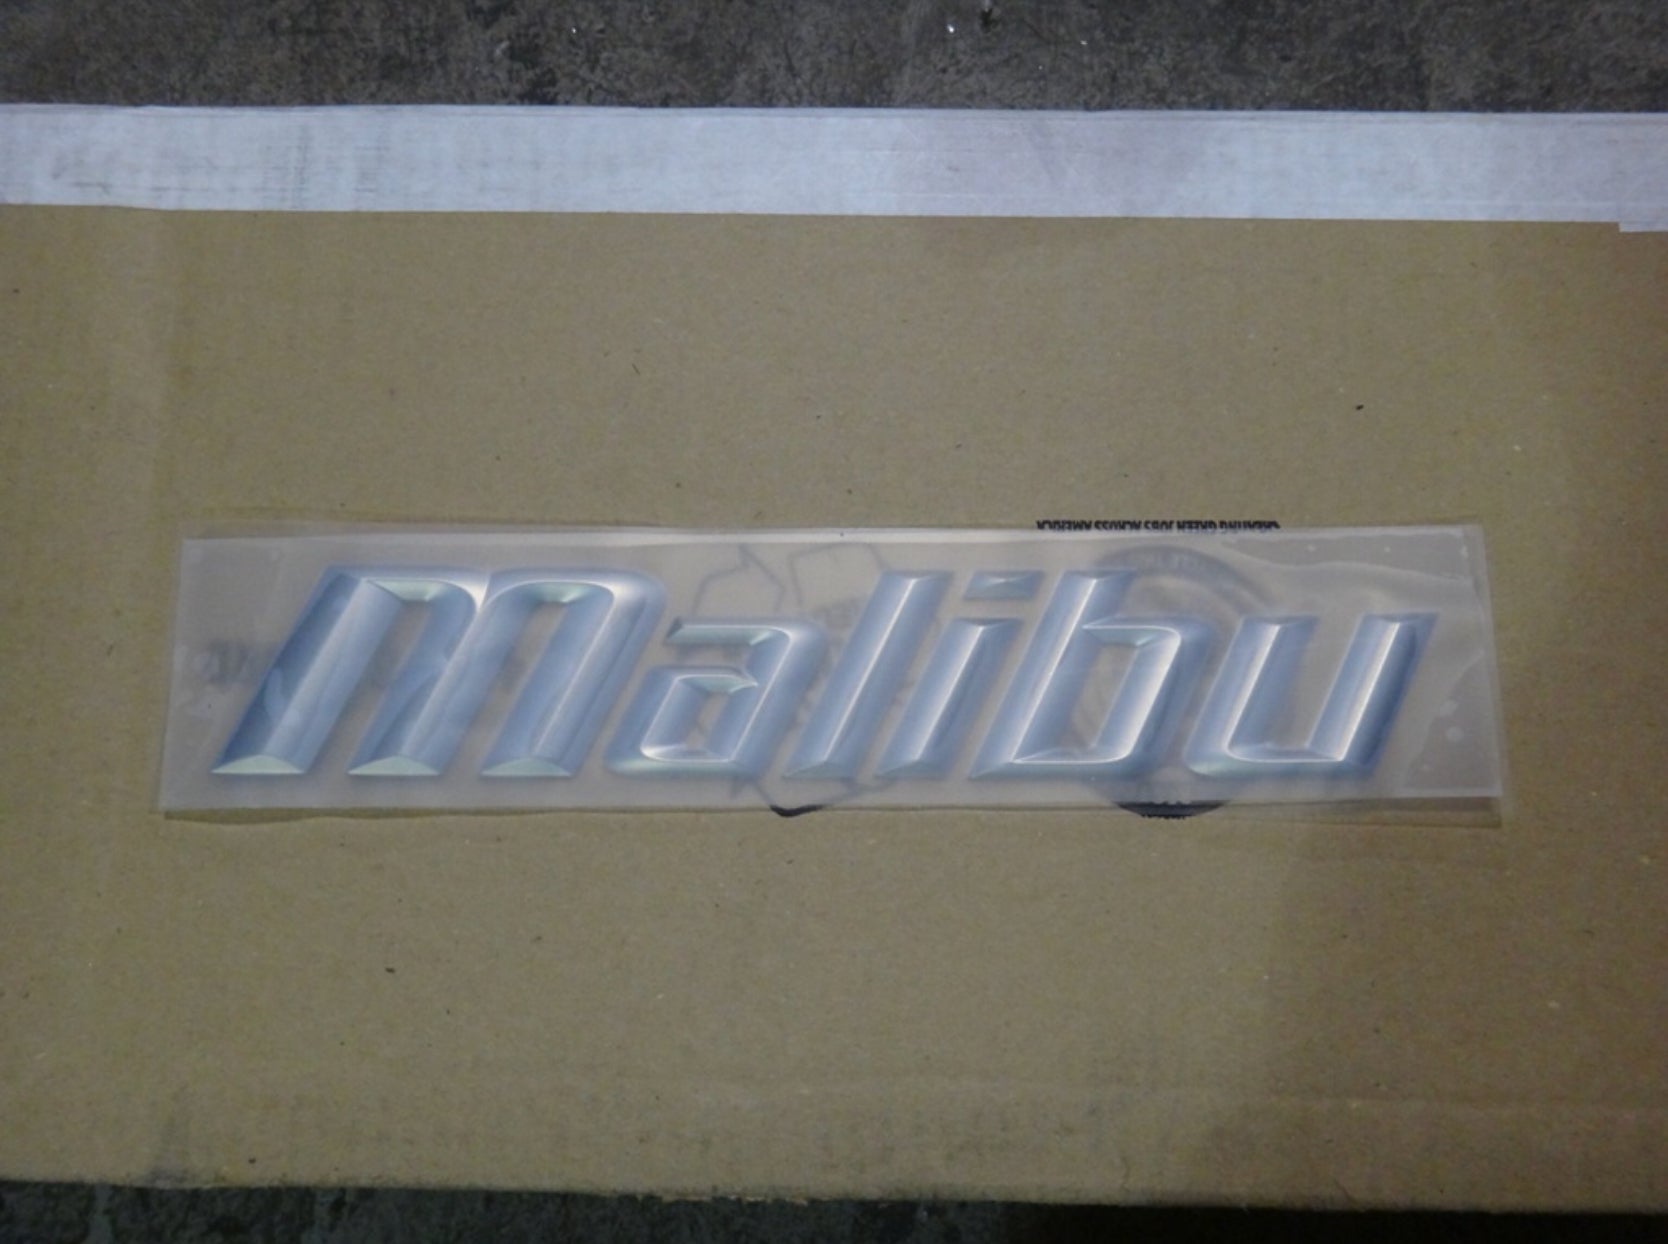 Malibu, SL24 Chrome Decal